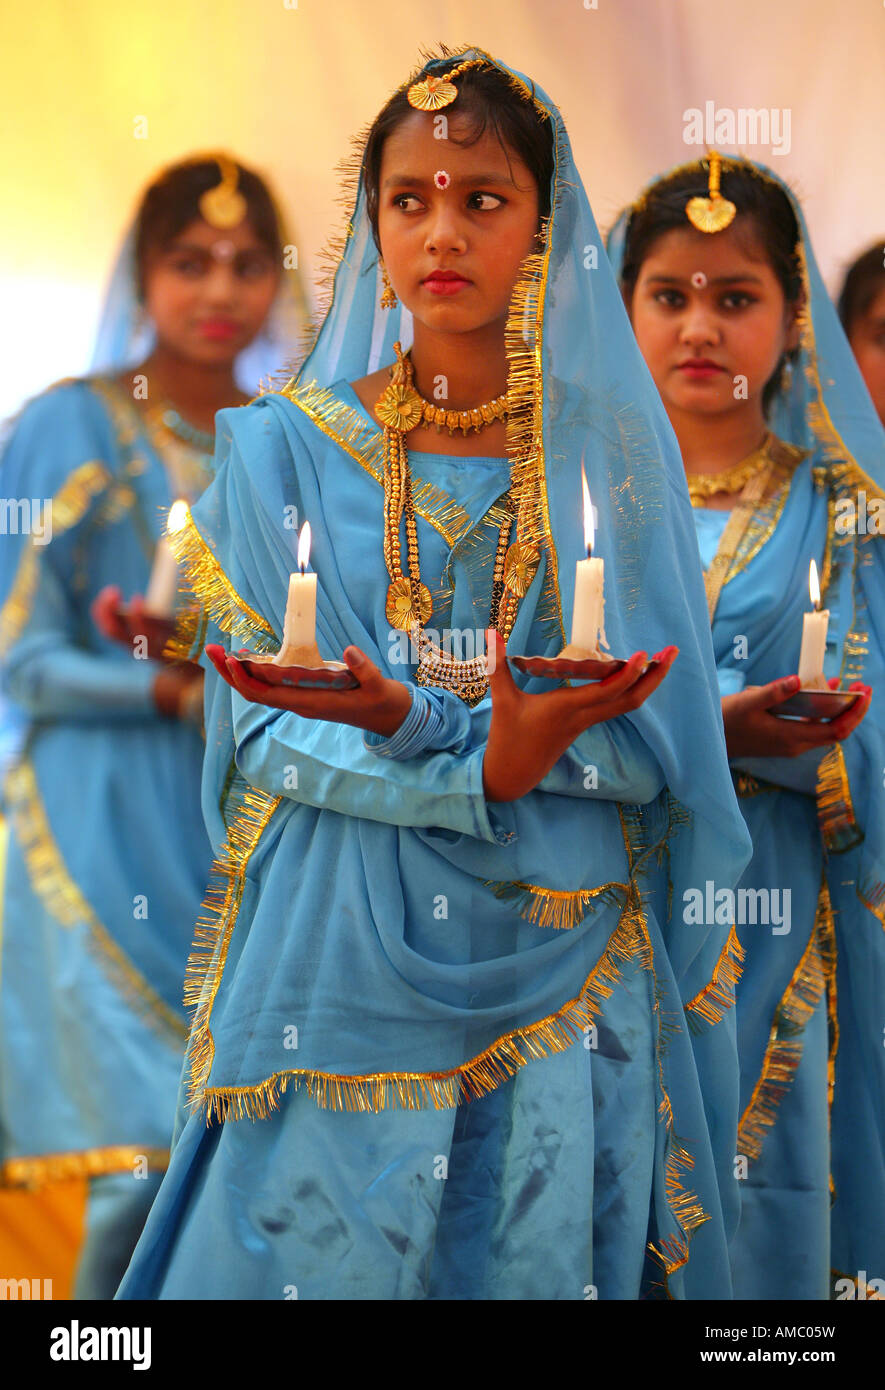 India, Bodhgaya, young girls performing a cultural dance Stock Photo